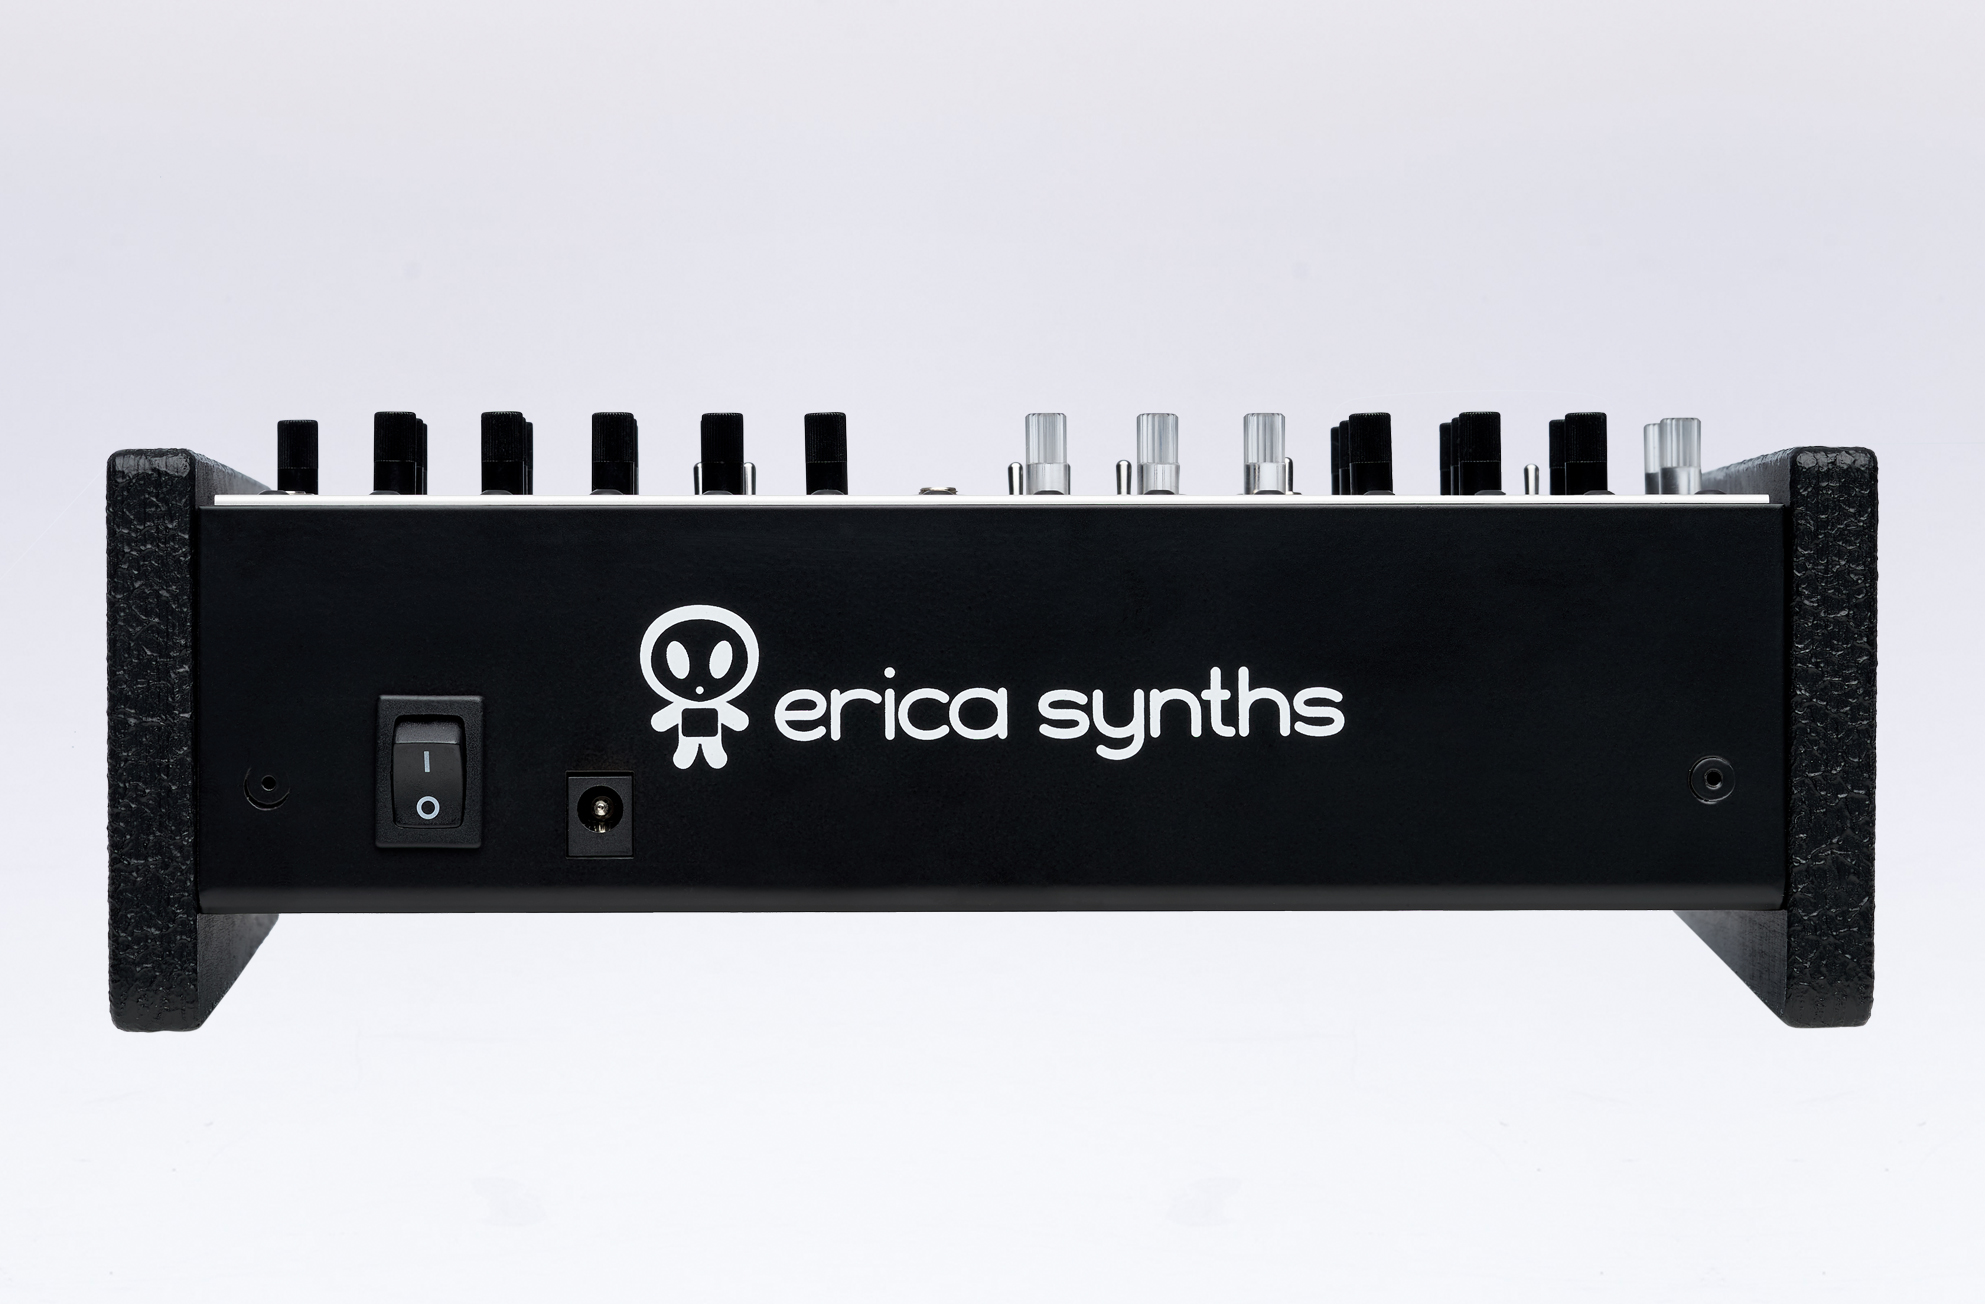 EricaSynths - Pico System II